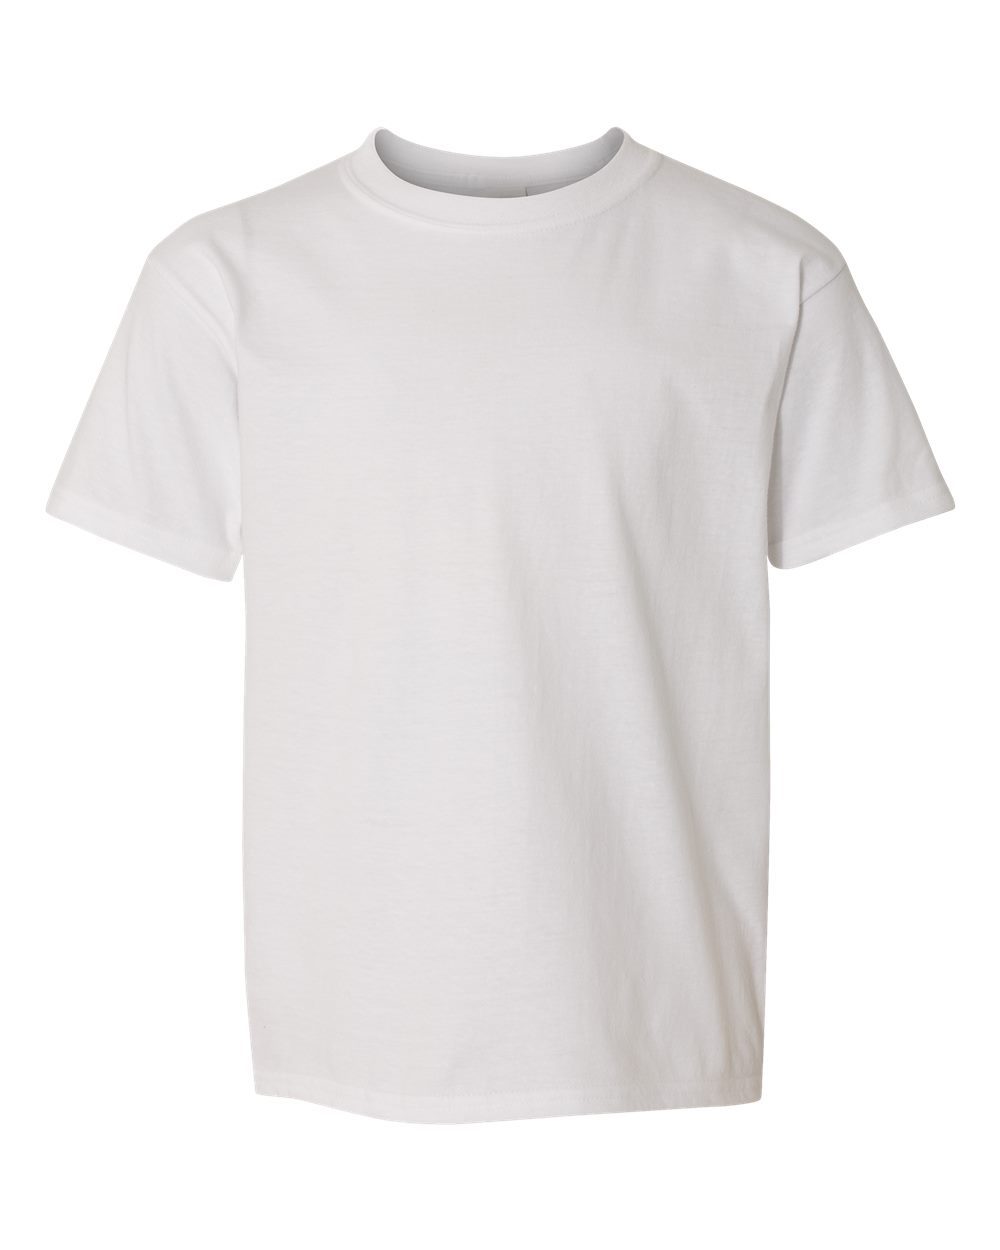 Softstyle® Youth T-Shirt - 64500B